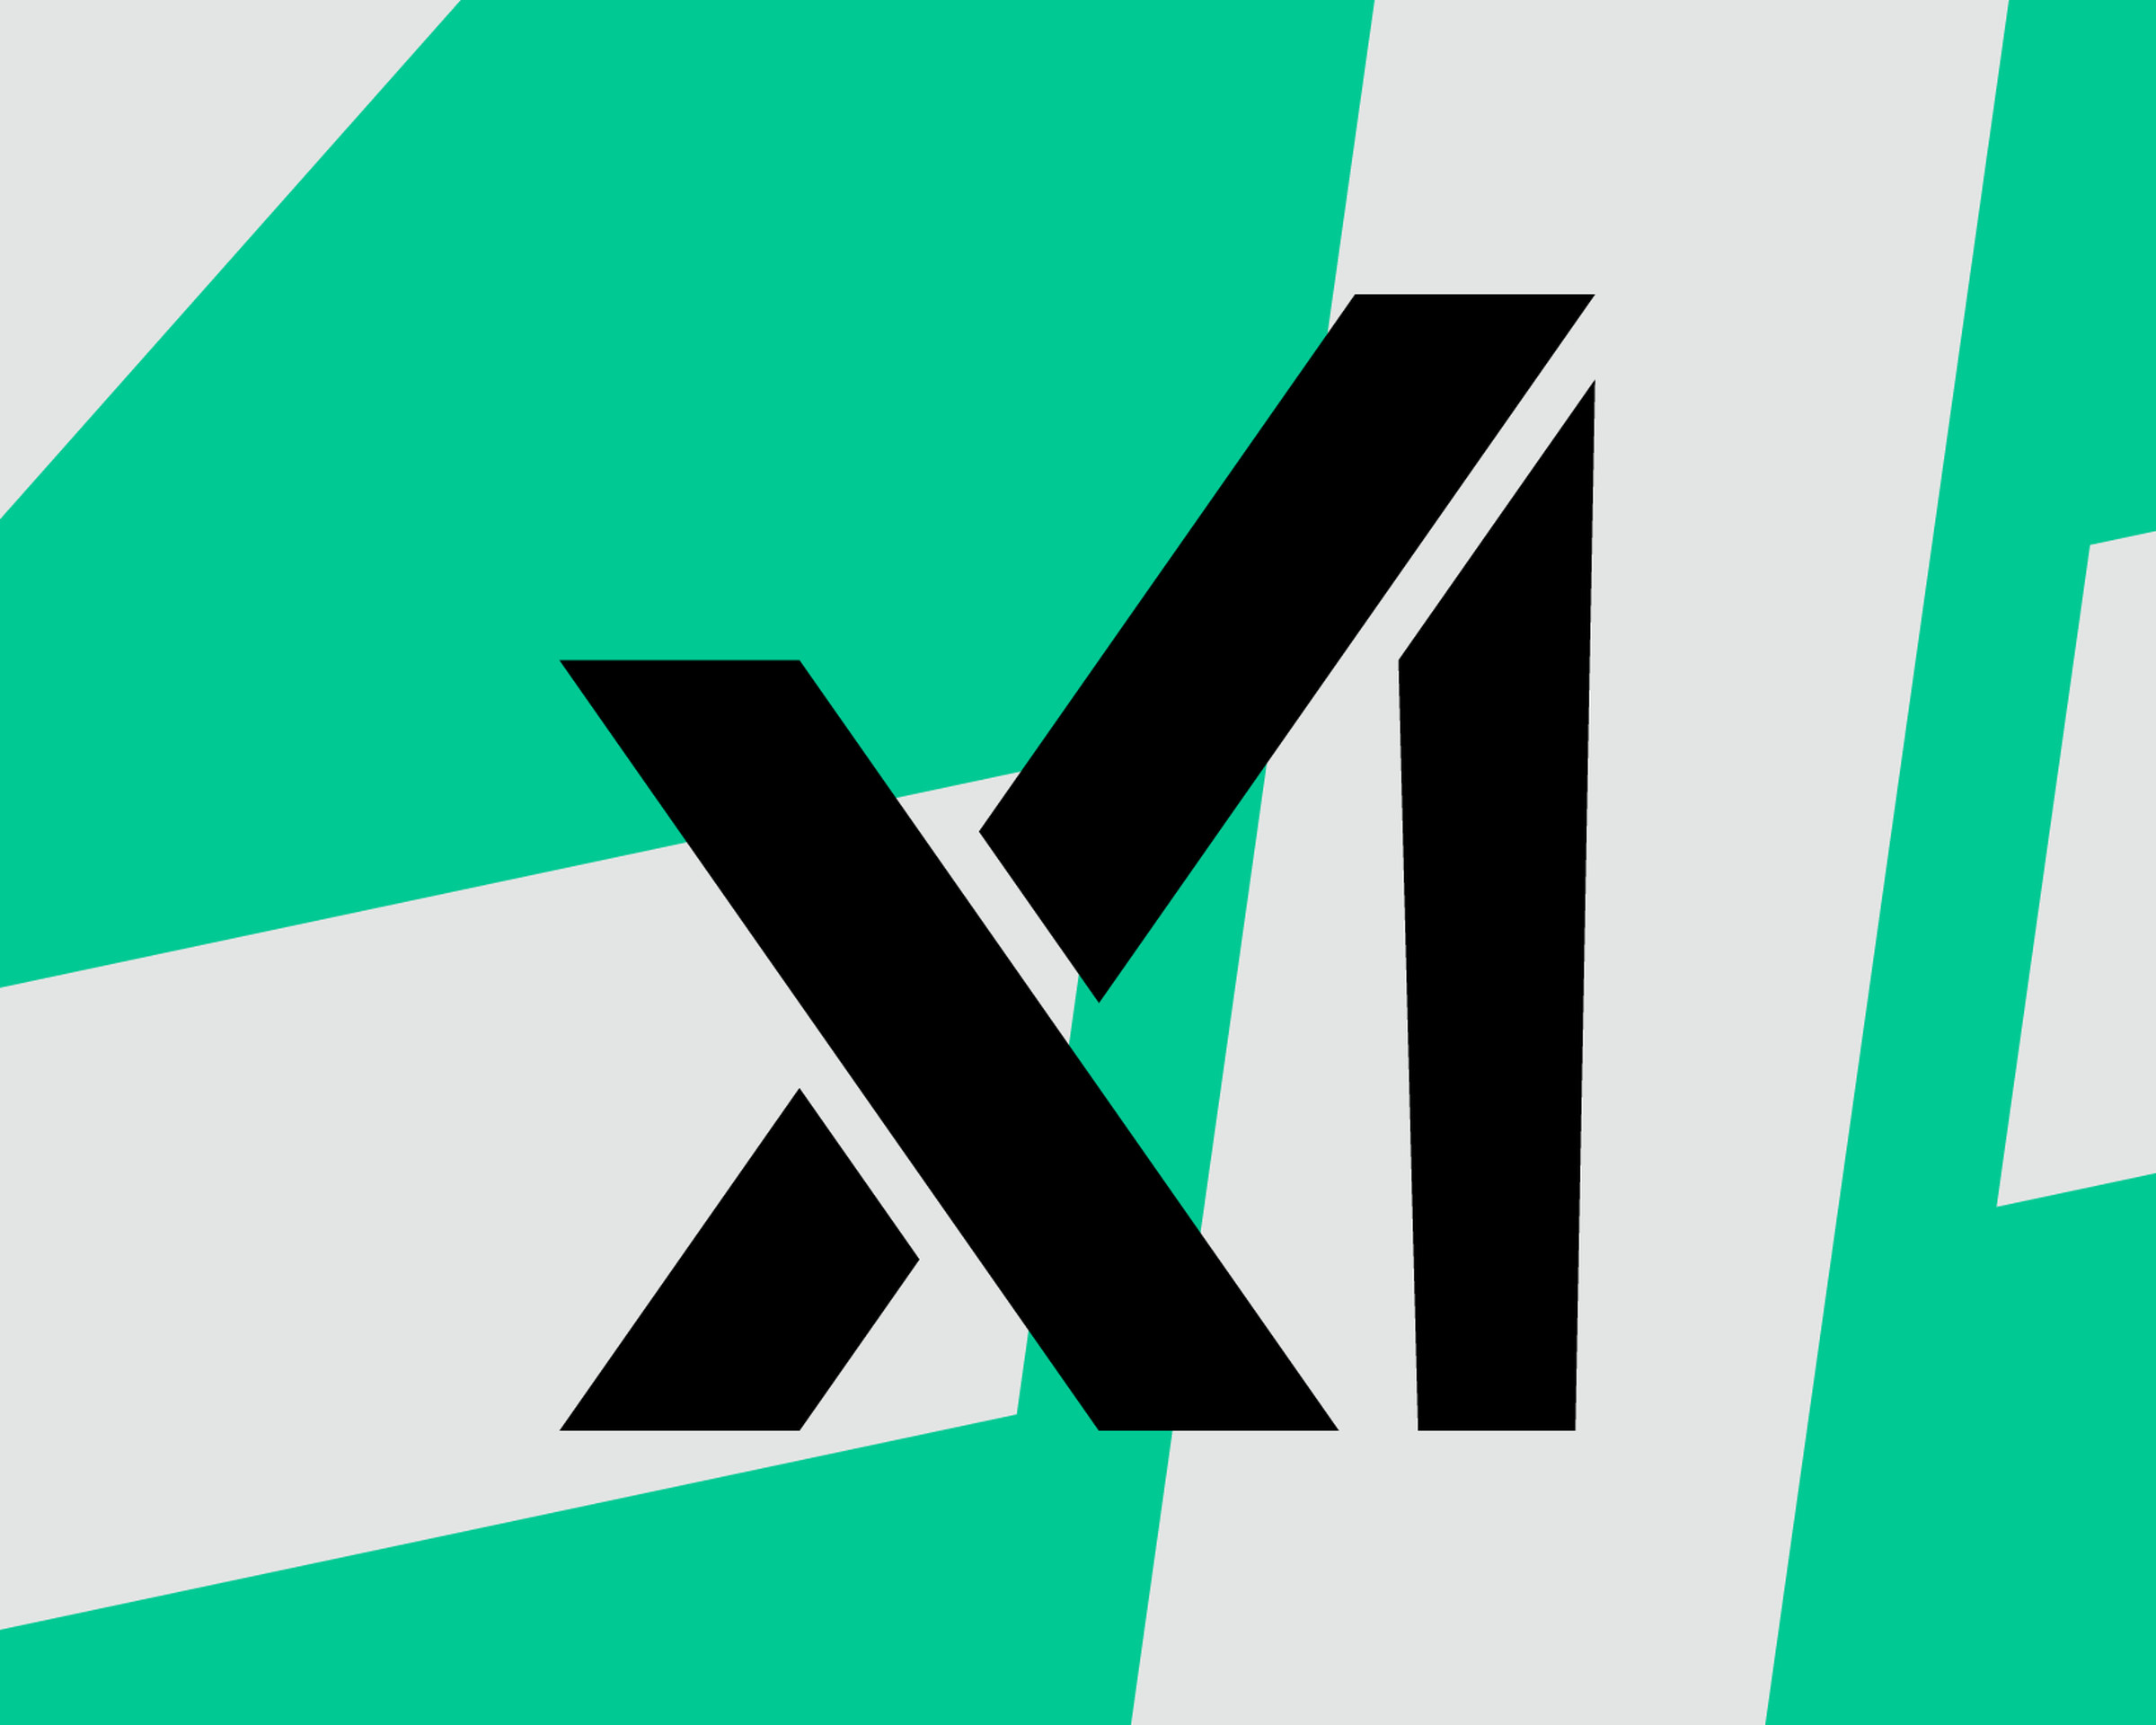 Vector illustration of the xAI logo.